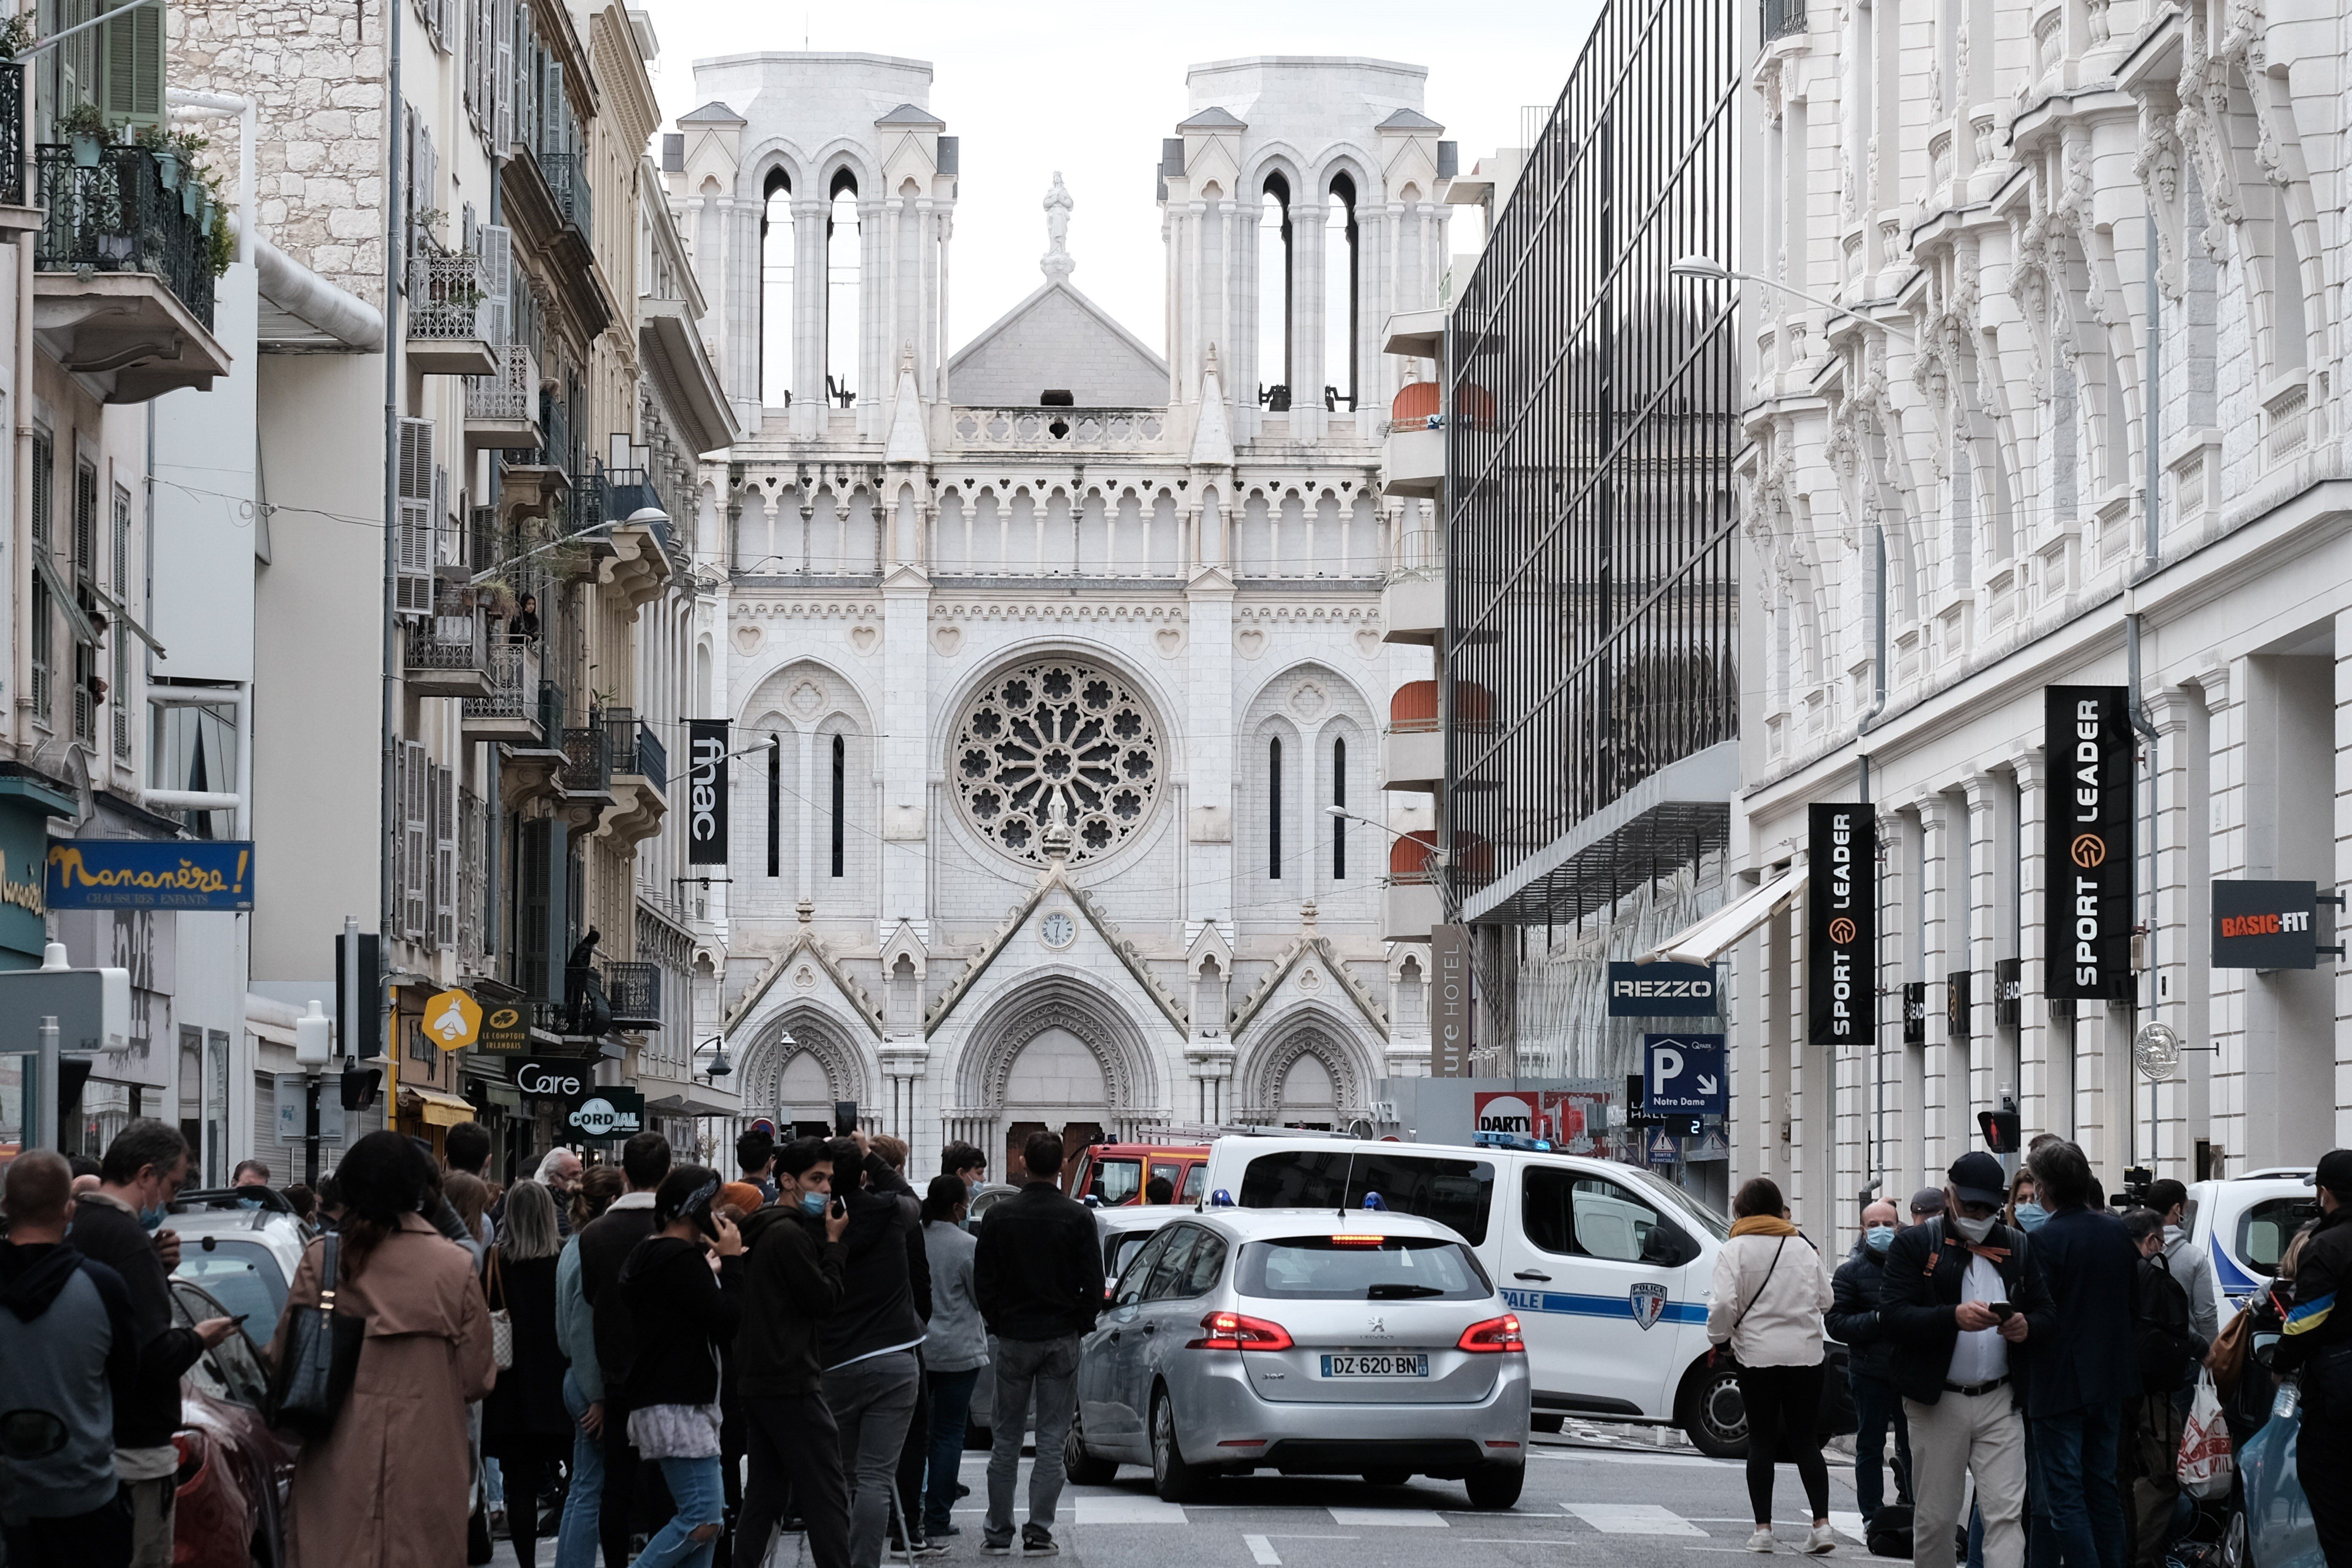 La basilique de Nice le 29 octobre 2020 (Xinhua/Serge Haouzi via Getty